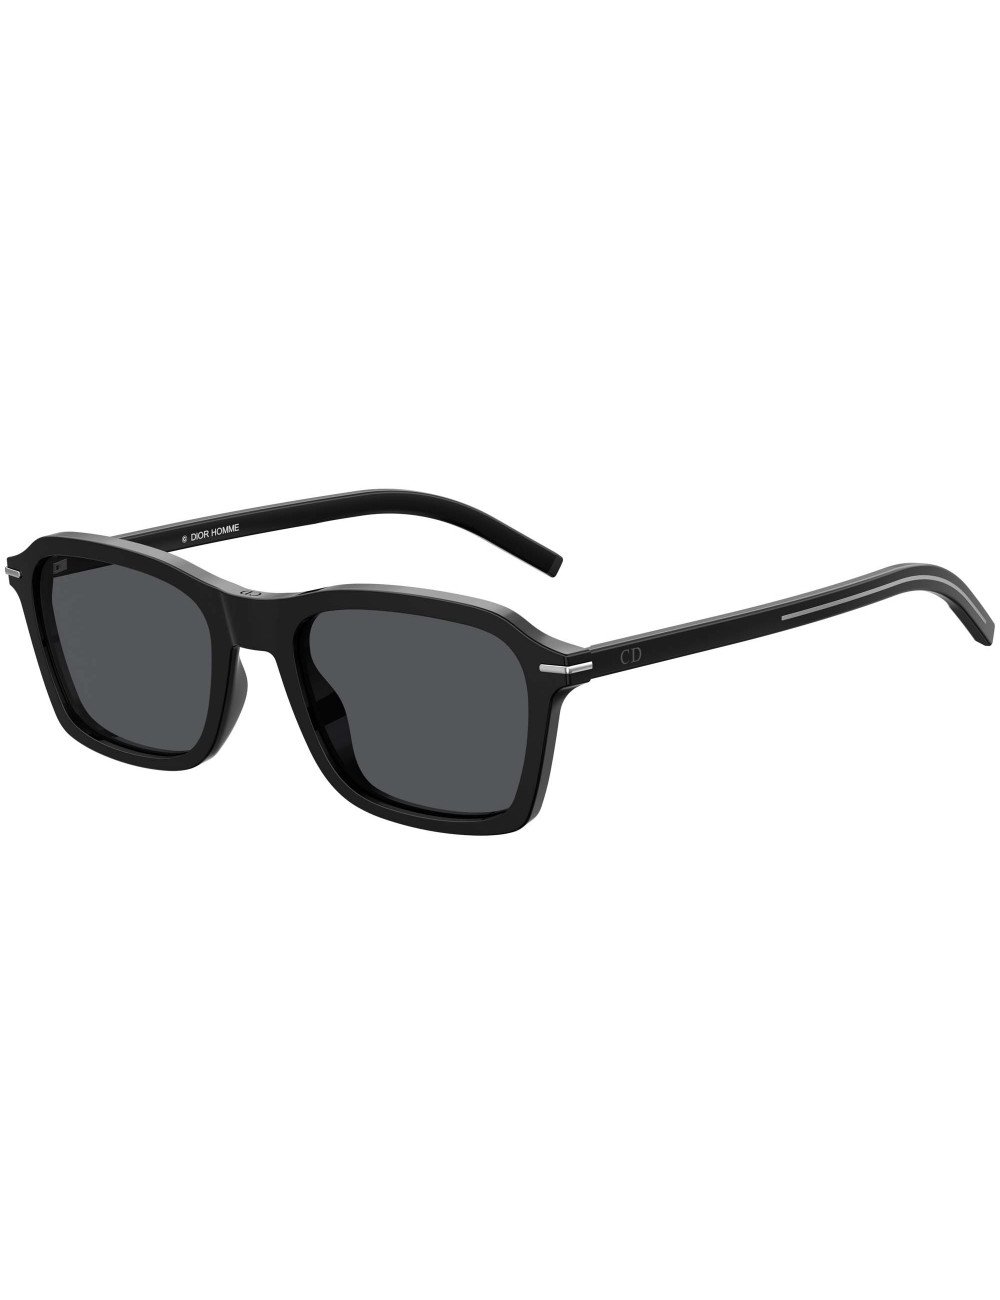 Dior  Sunglasses  DiorBlackSuit XL S1I  Silver Black  Dior Eyewear   Avvenice